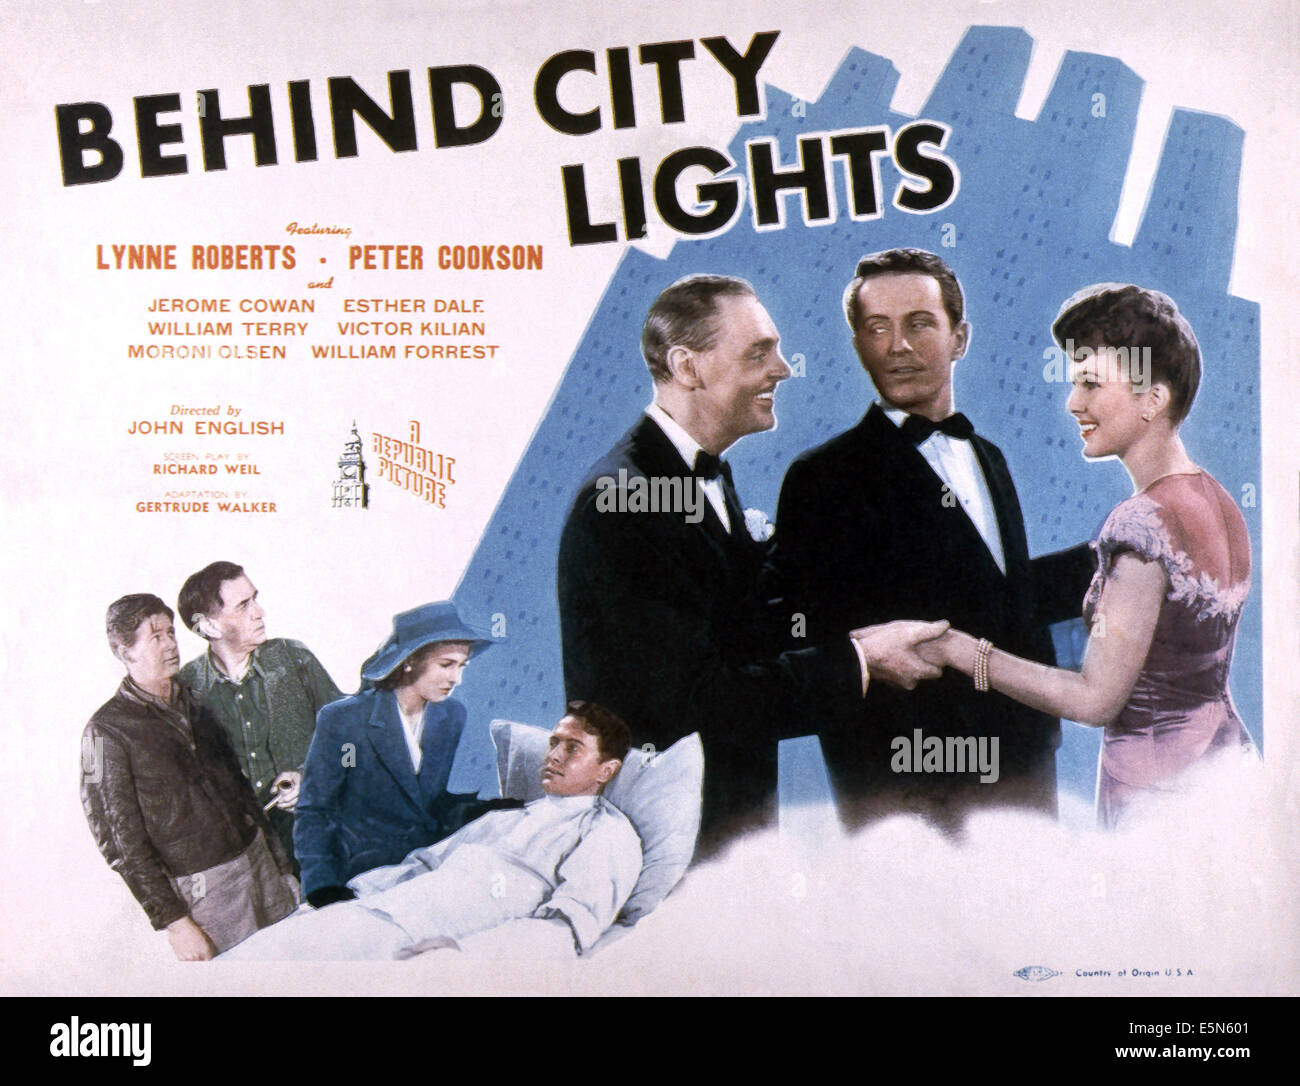 HINTER CITY LIGHTS, von links: Emmett Vogan, Victor Kilian, Lynne Roberts, Peter Cookson, Jerome Cowan, Peter Cookson, Lynne Stockfoto